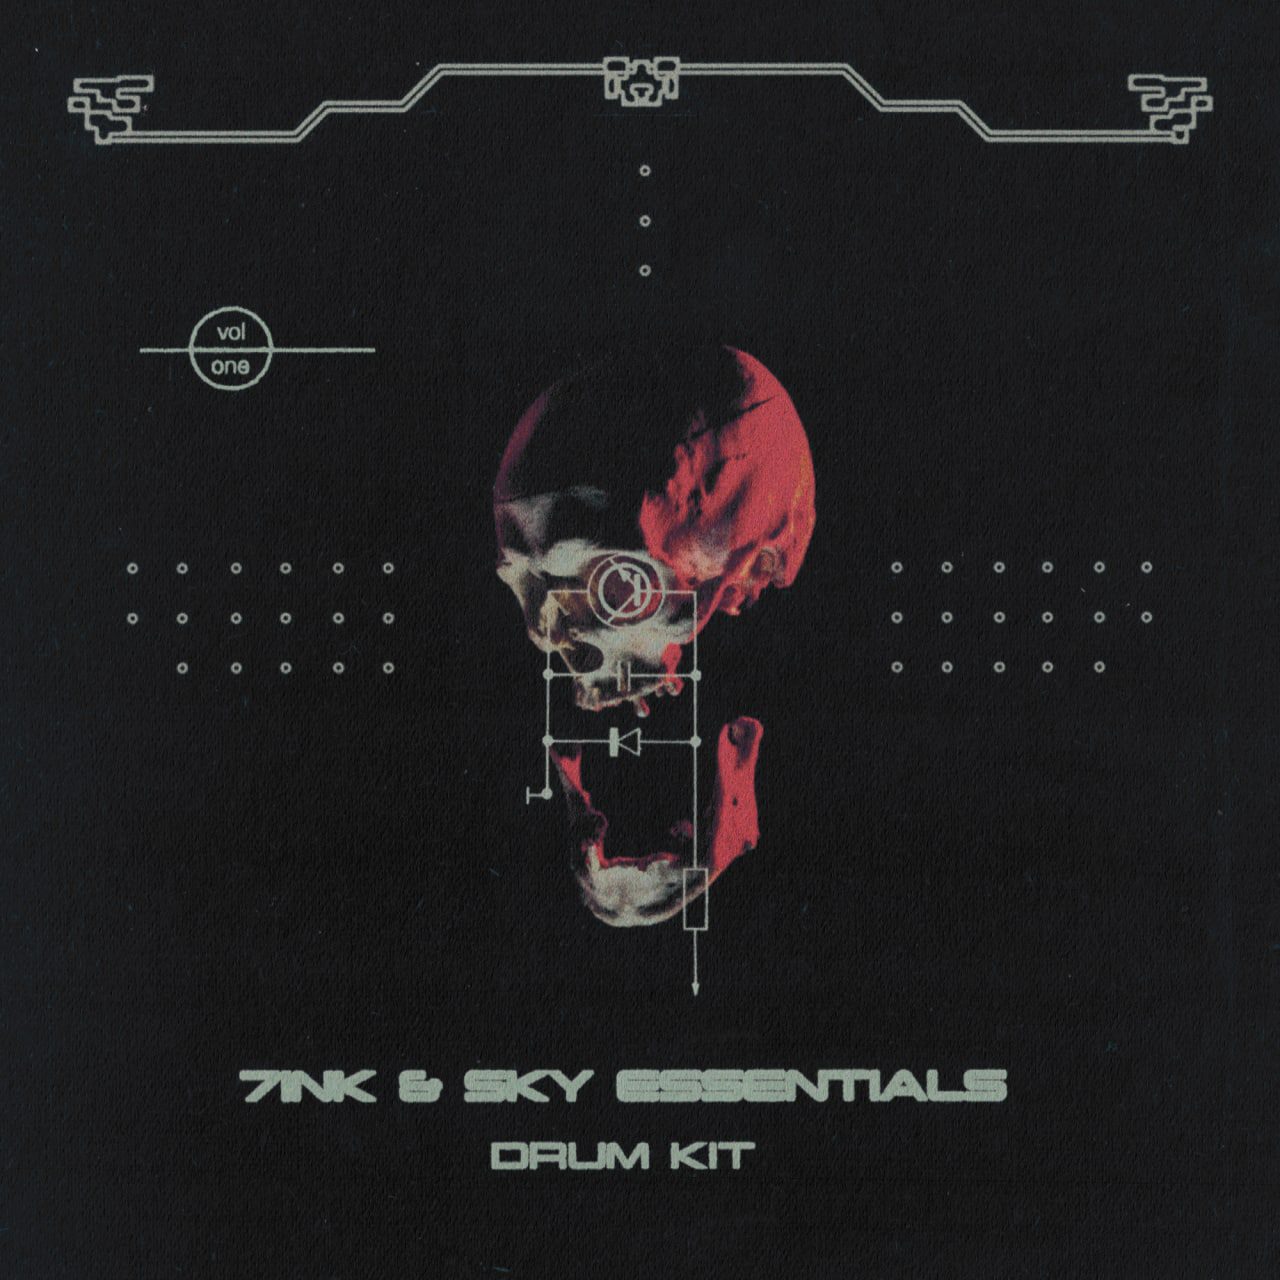 7ink & Sky – Essentials Drum Kit Vol 1